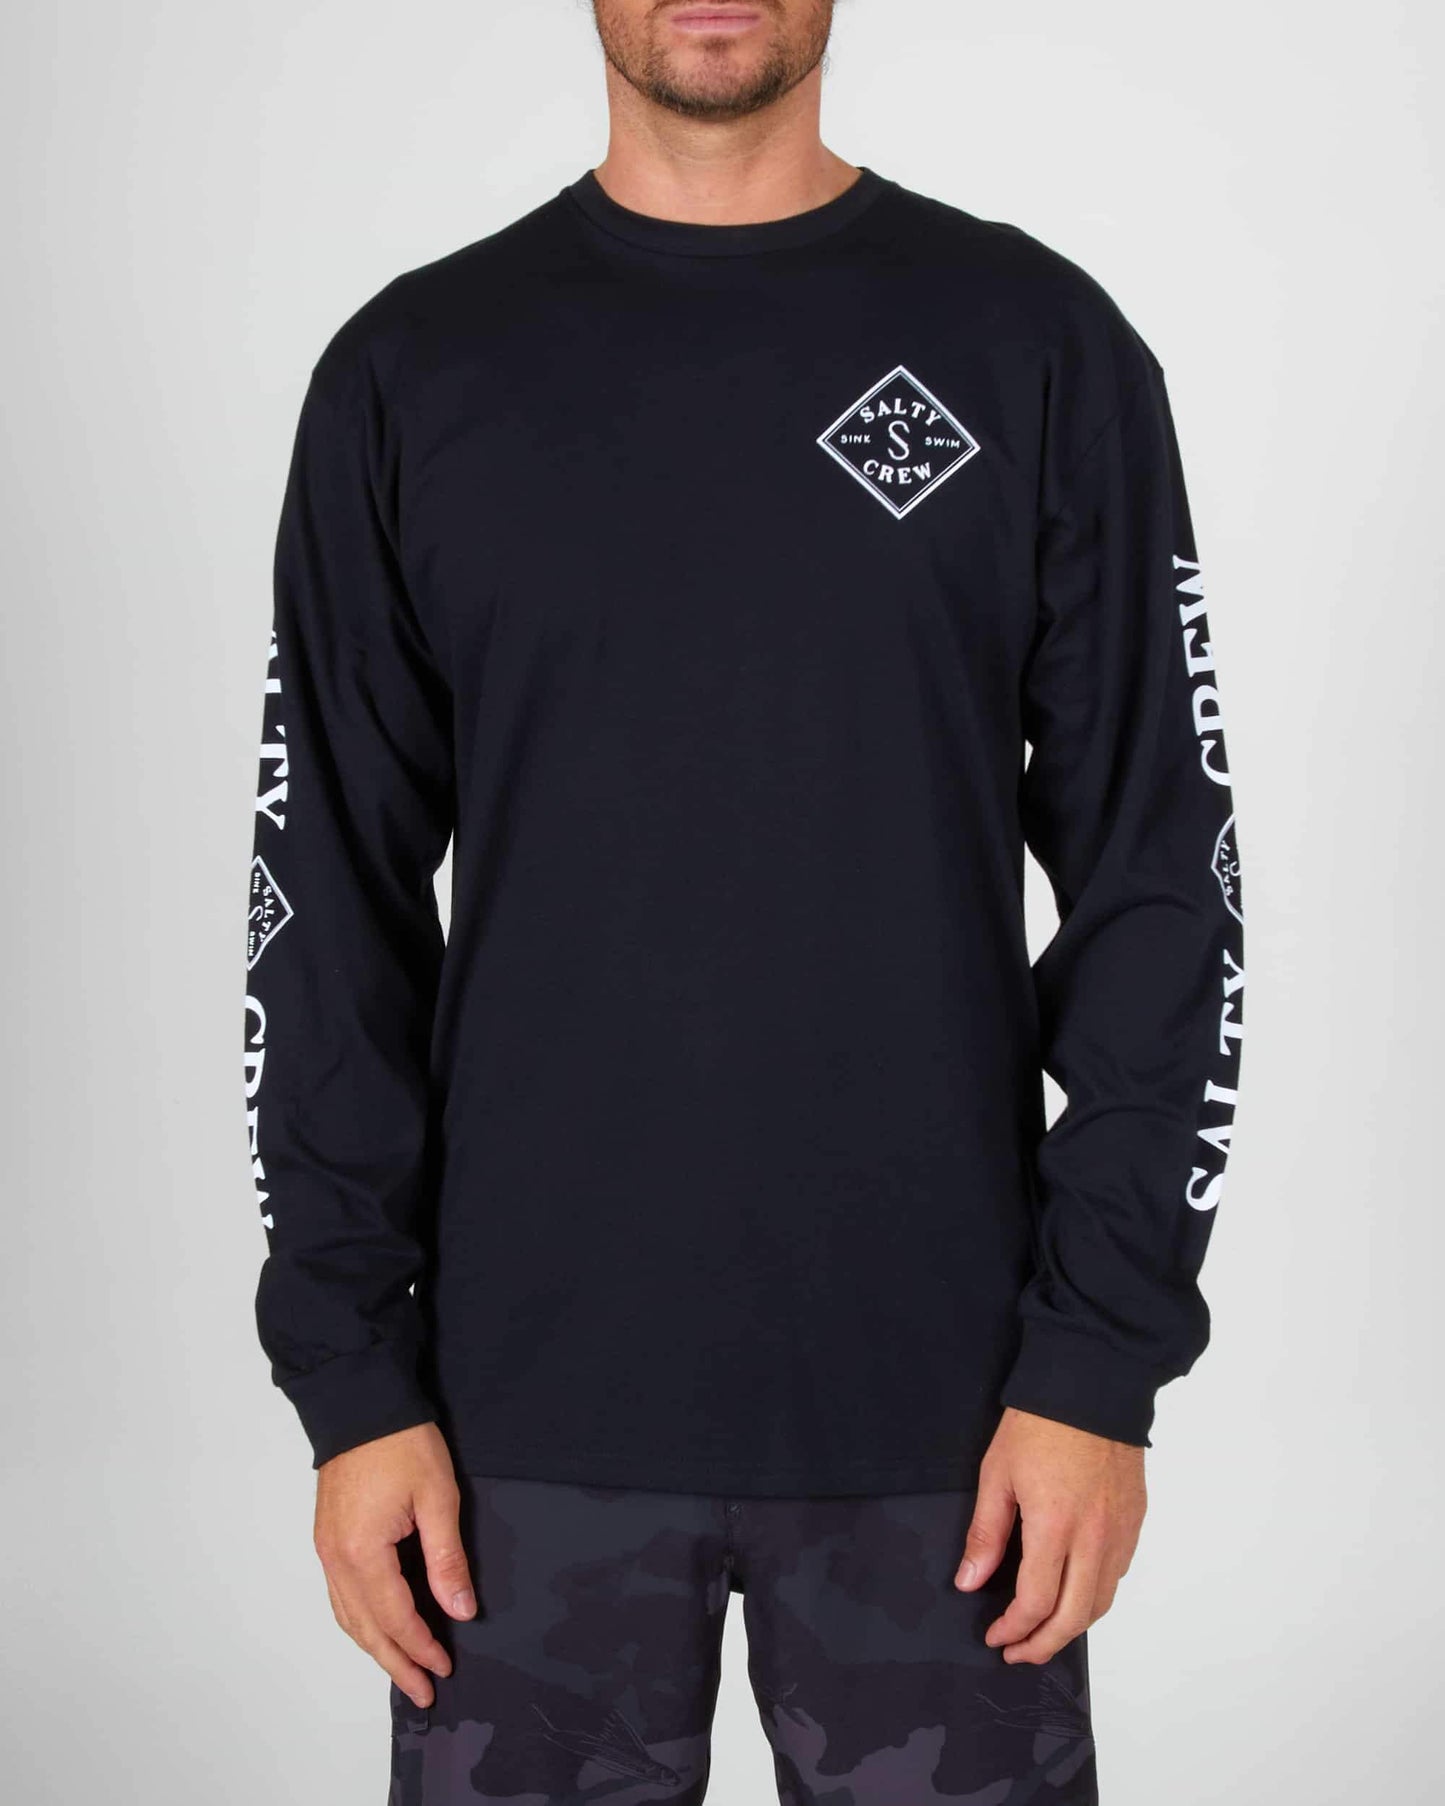 Salty Crew Mens Shirt Skipjack Premium 2XL / Black (BLK)